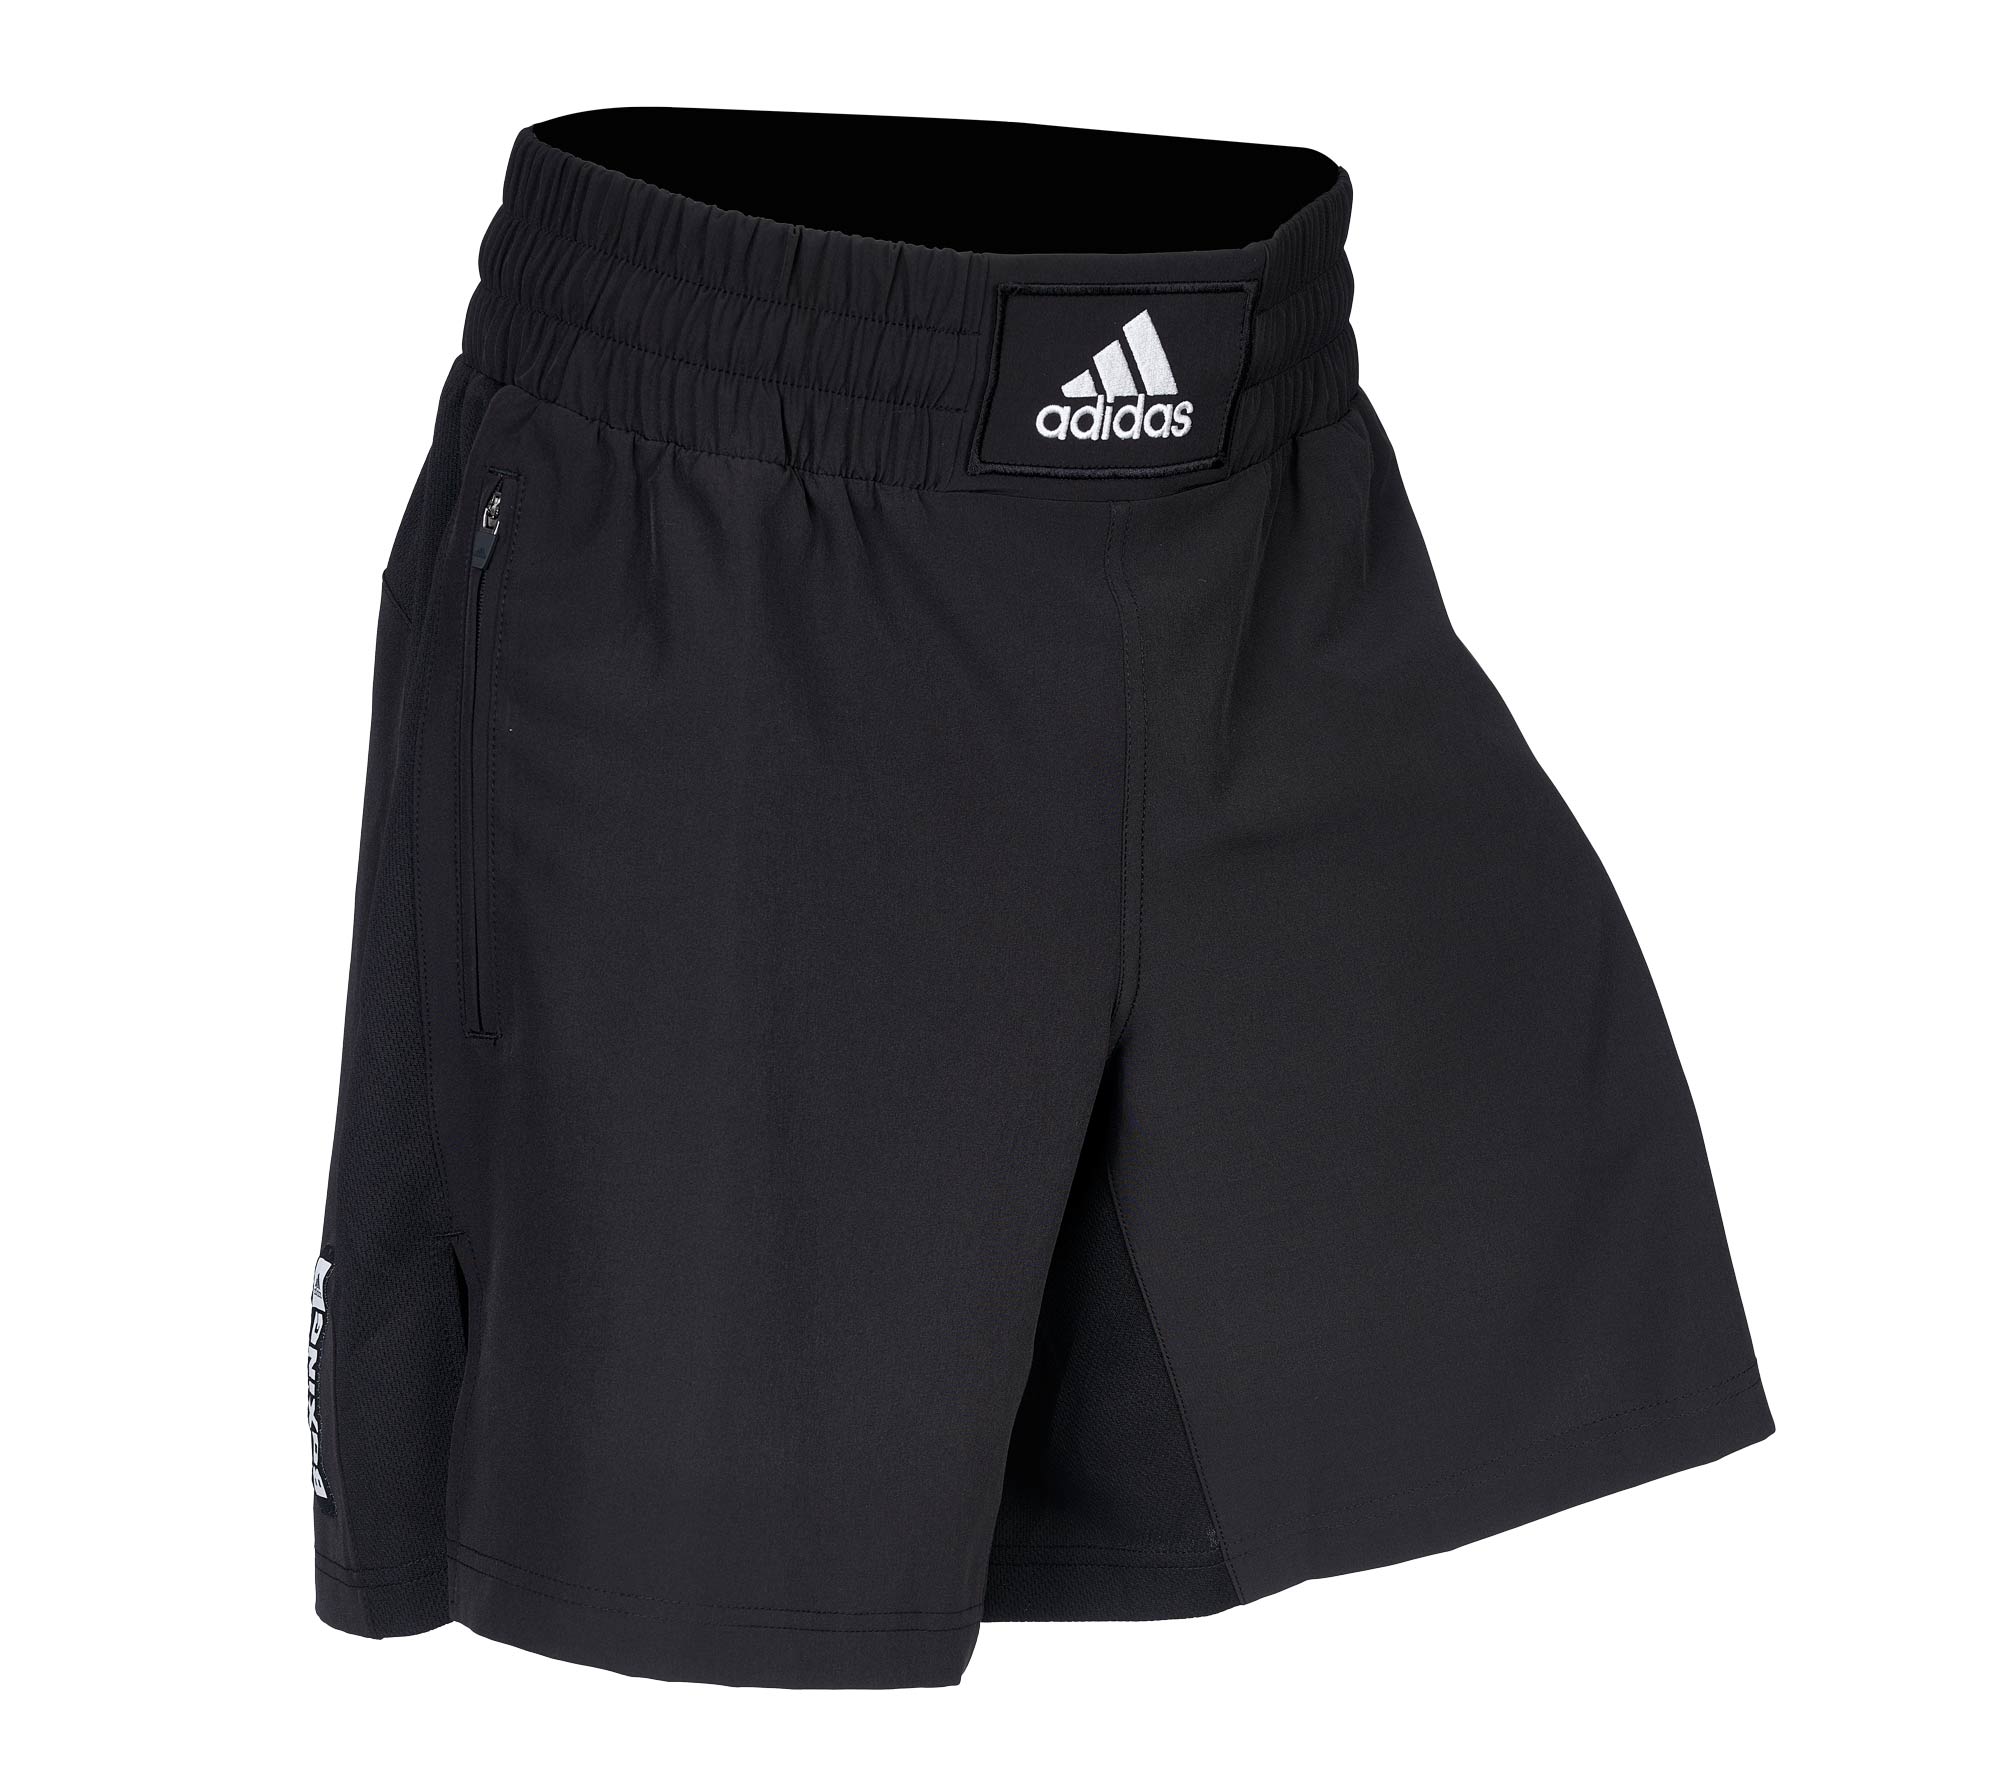 adidas boxing wear tech shorts BXWTSH01